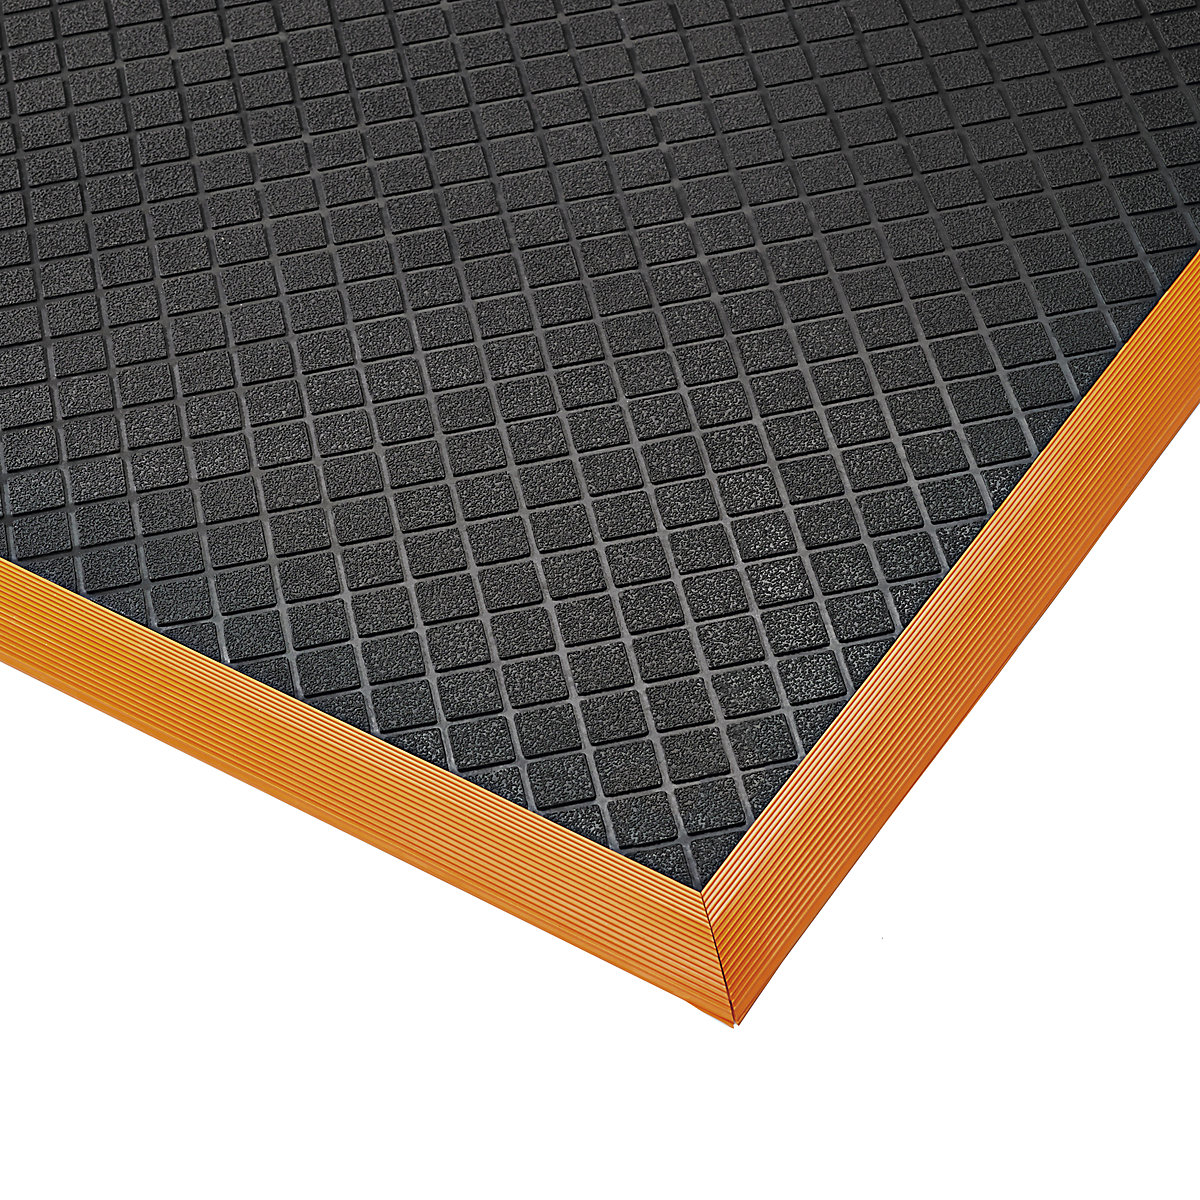 Safety Stance anti-fatigue matting - NOTRAX